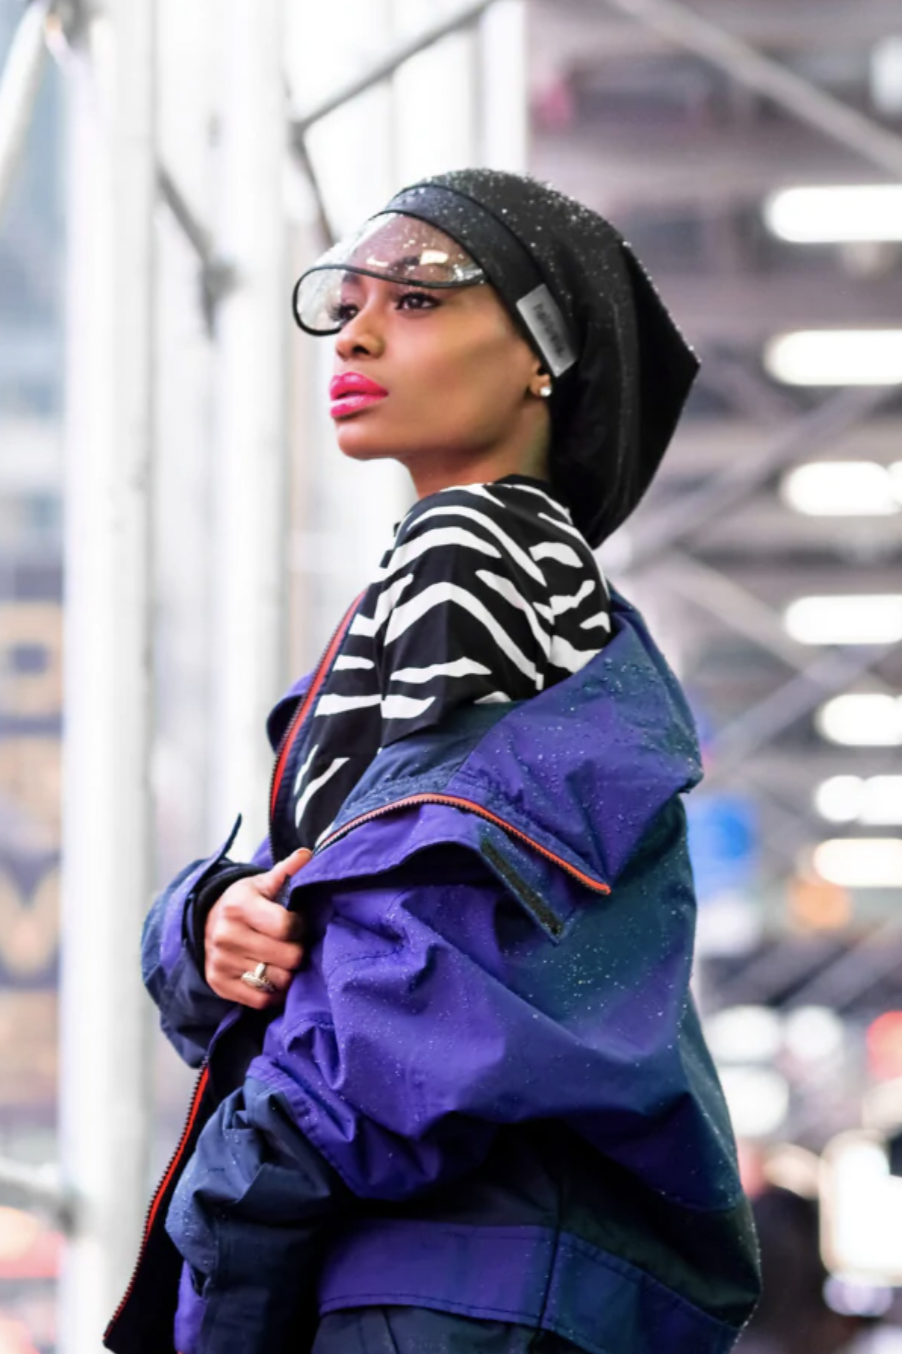 Urban Classics Ladies Satin Bomber Jacket silver -  -  Online Hip Hop Fashion Store